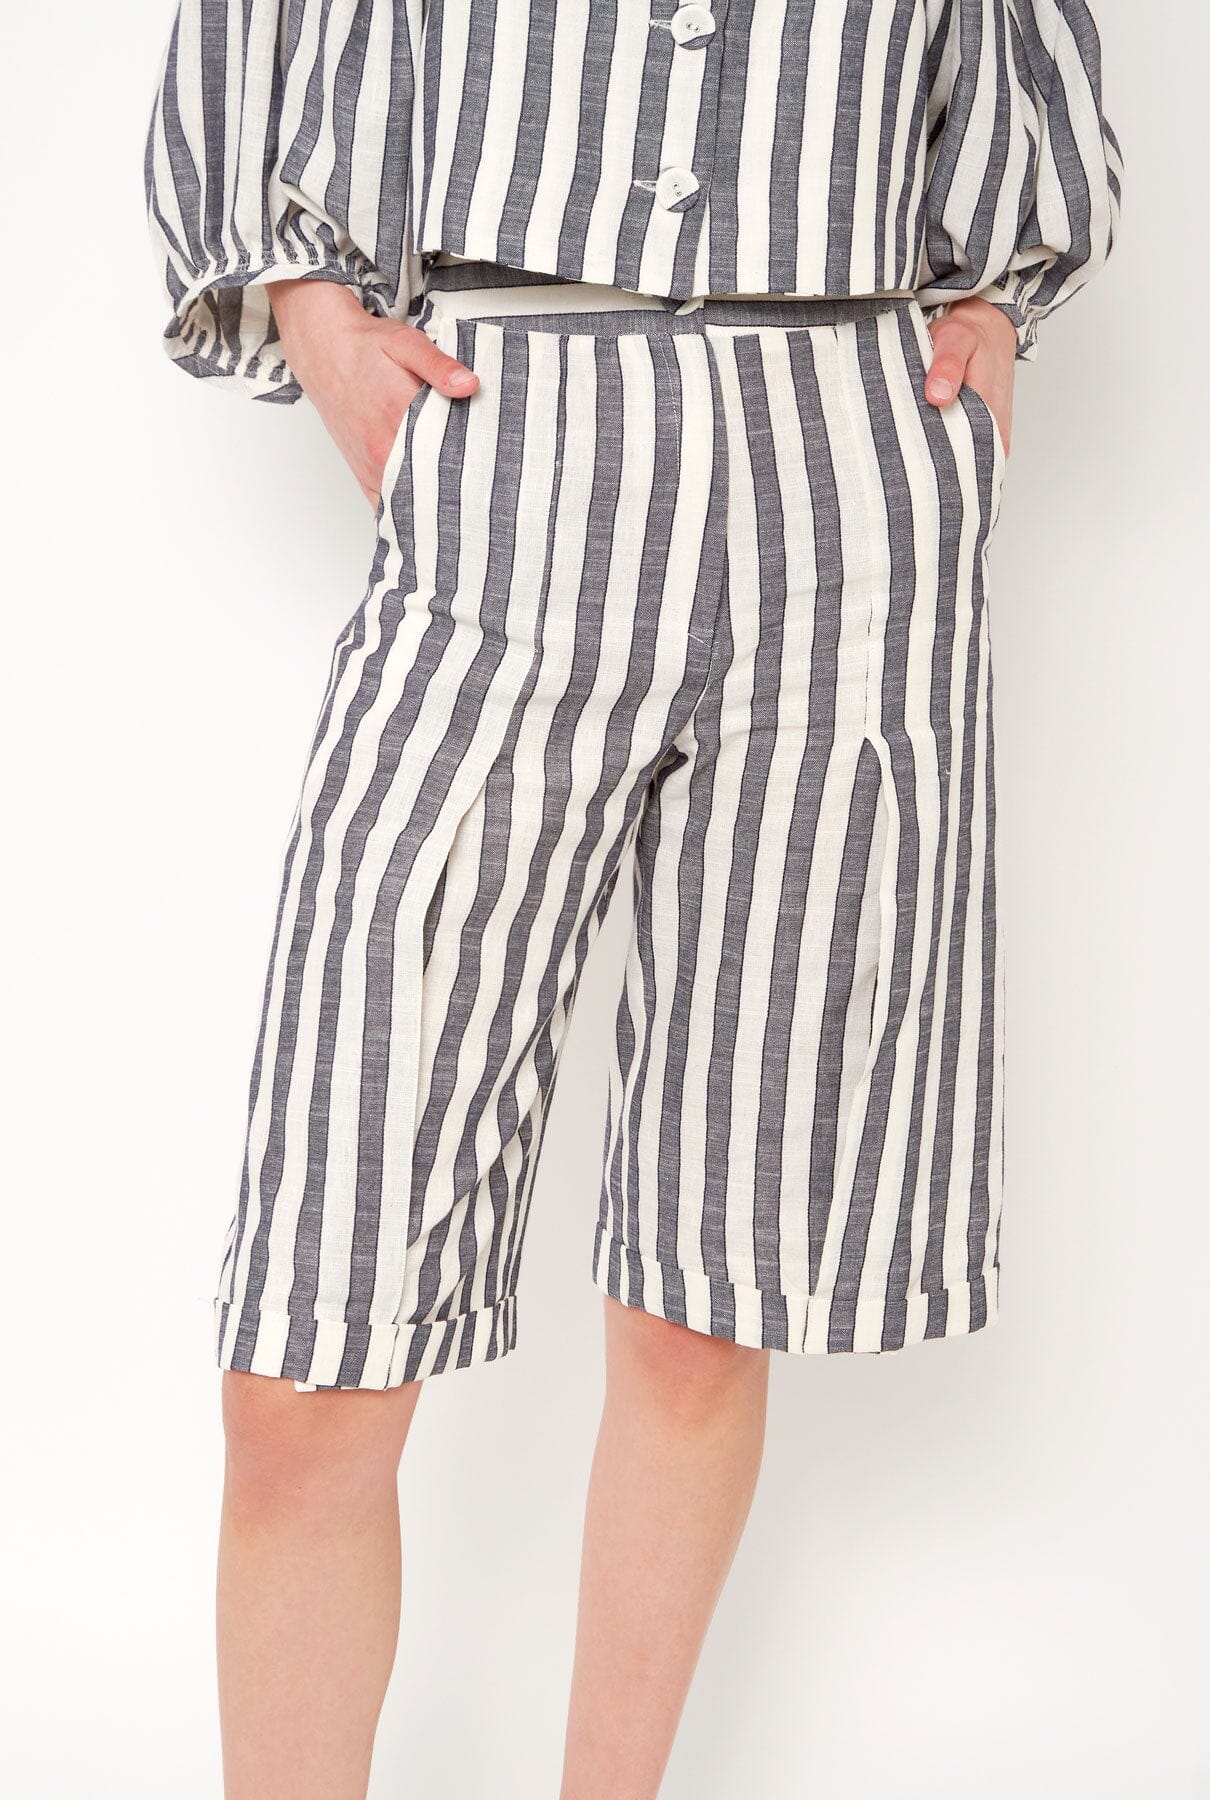 Sola Bermuda - Navy Stripes Trousers Diddo Madrid 